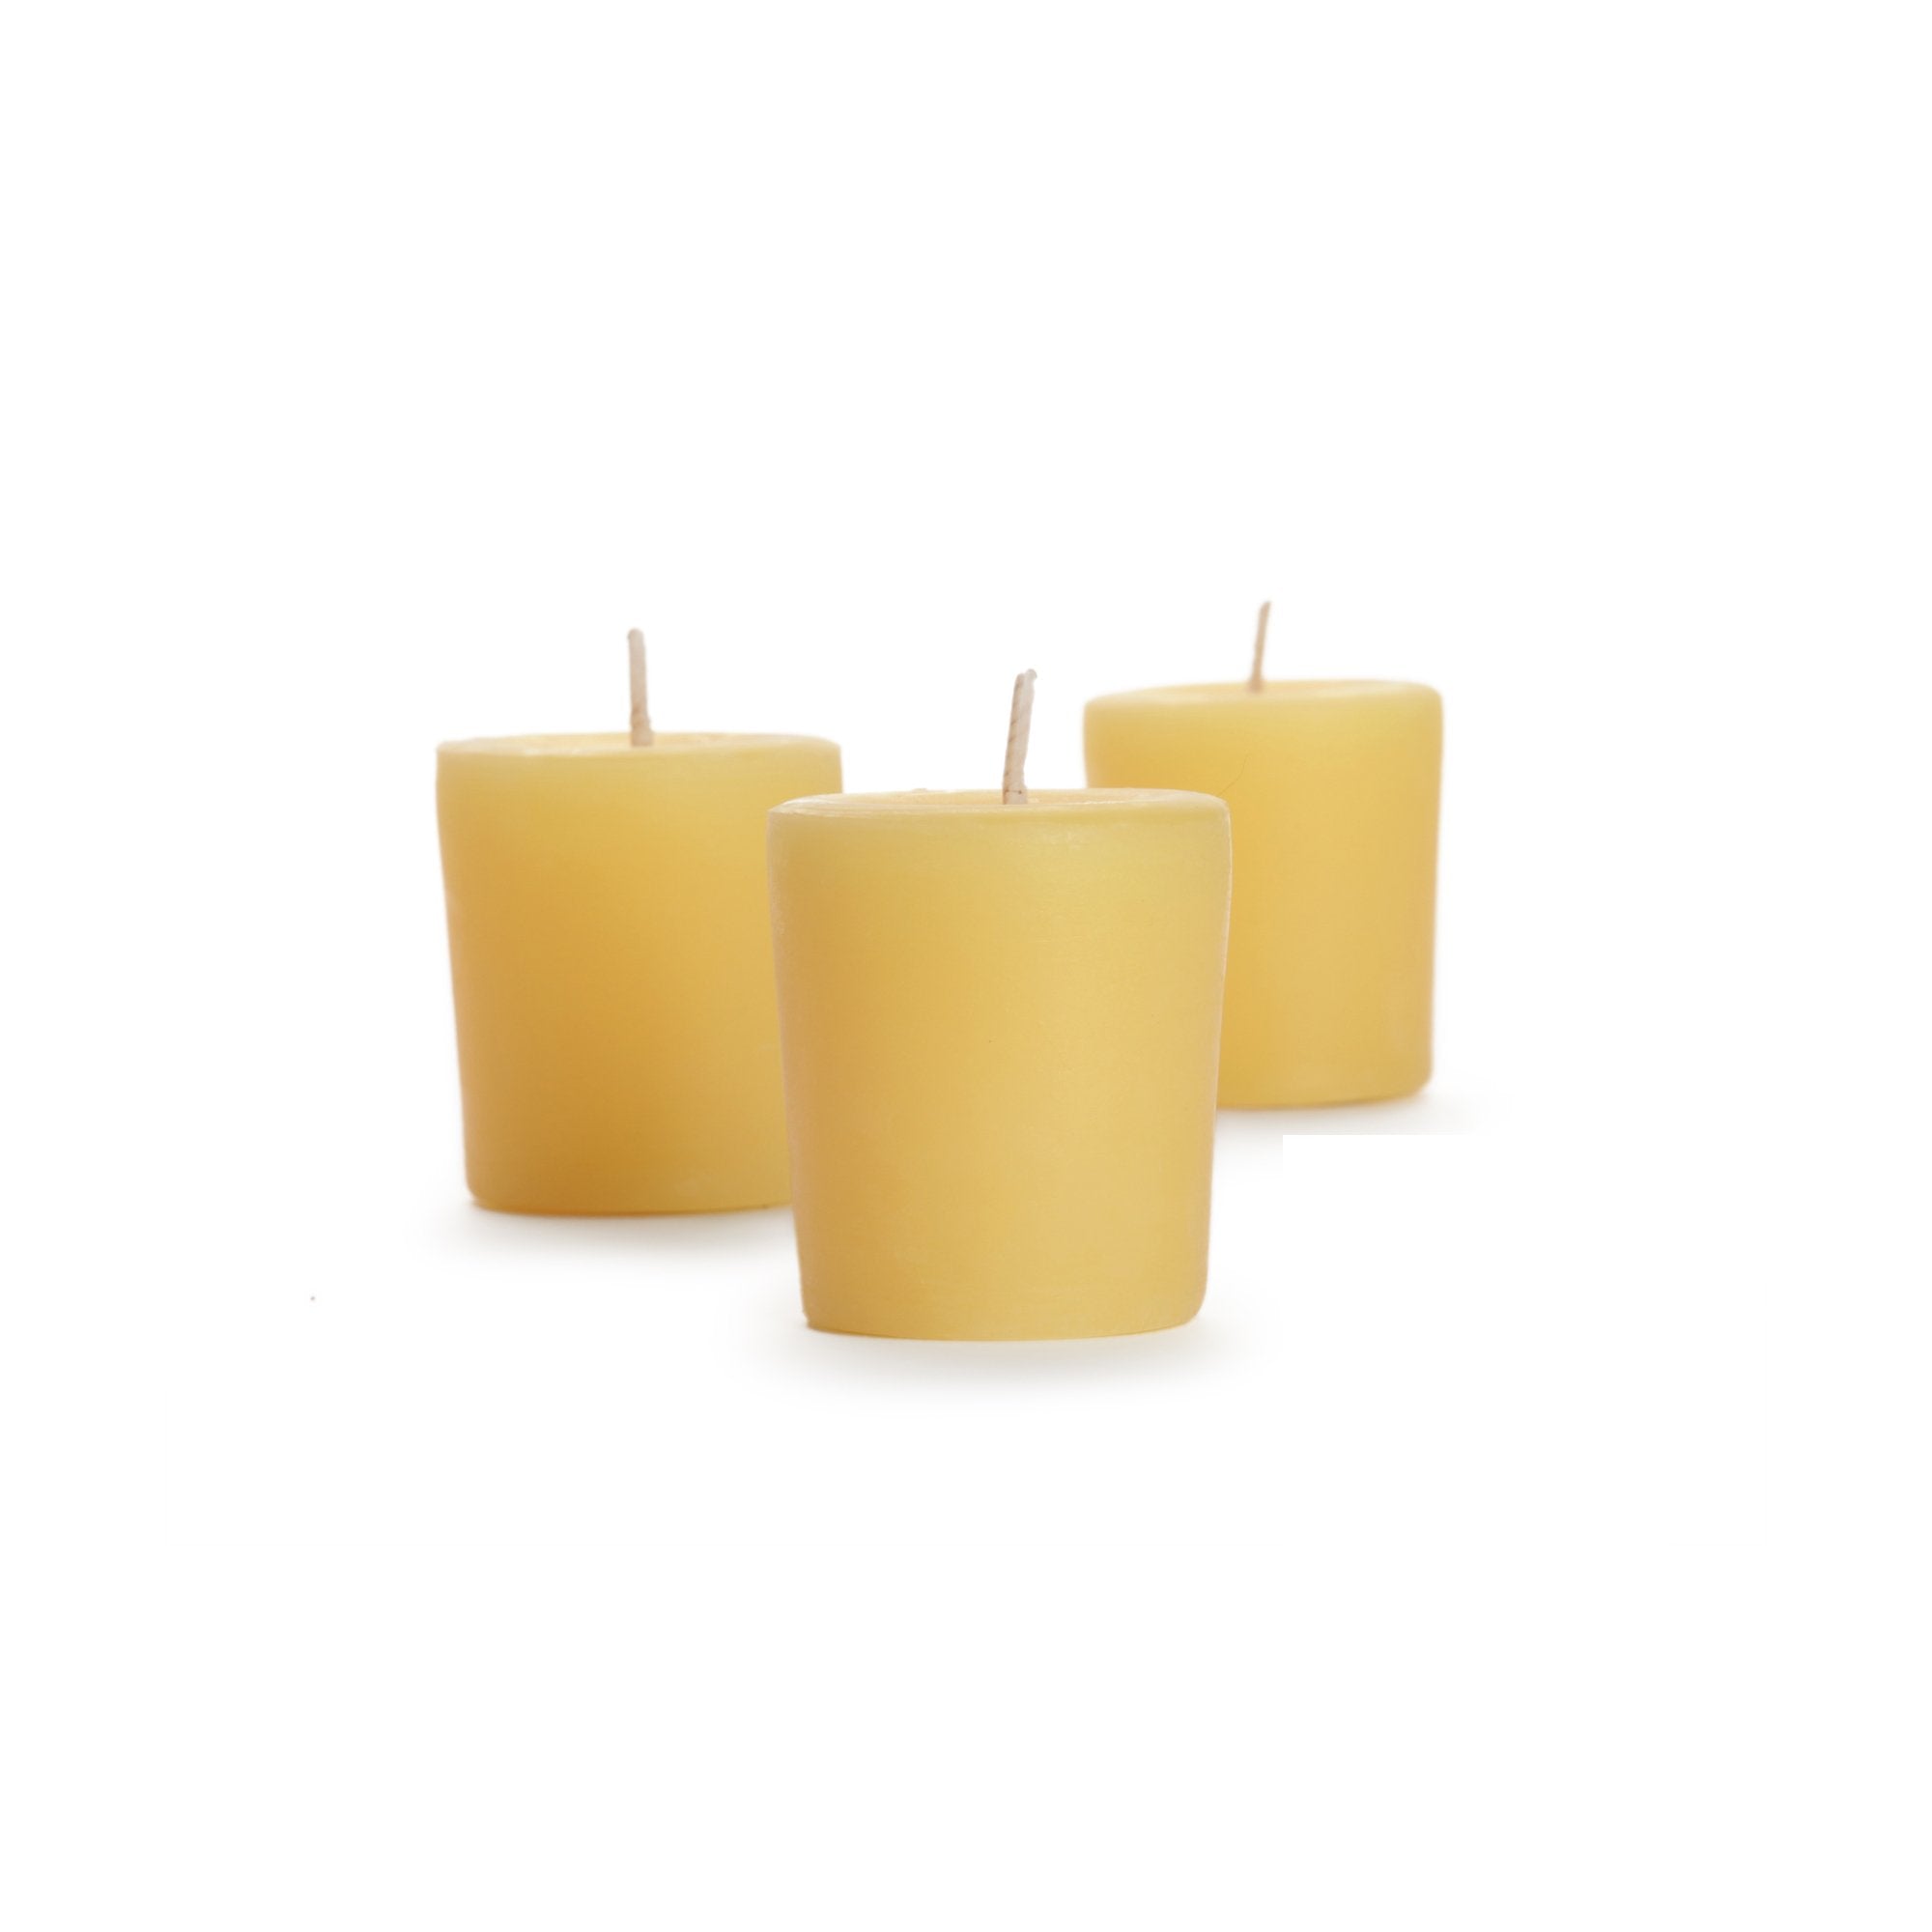 Big Dipper Wax Works Aromatherapy Rejuvenation Sweet Orange and Clove Bud 3 x 3.5 inch Pillar Candle